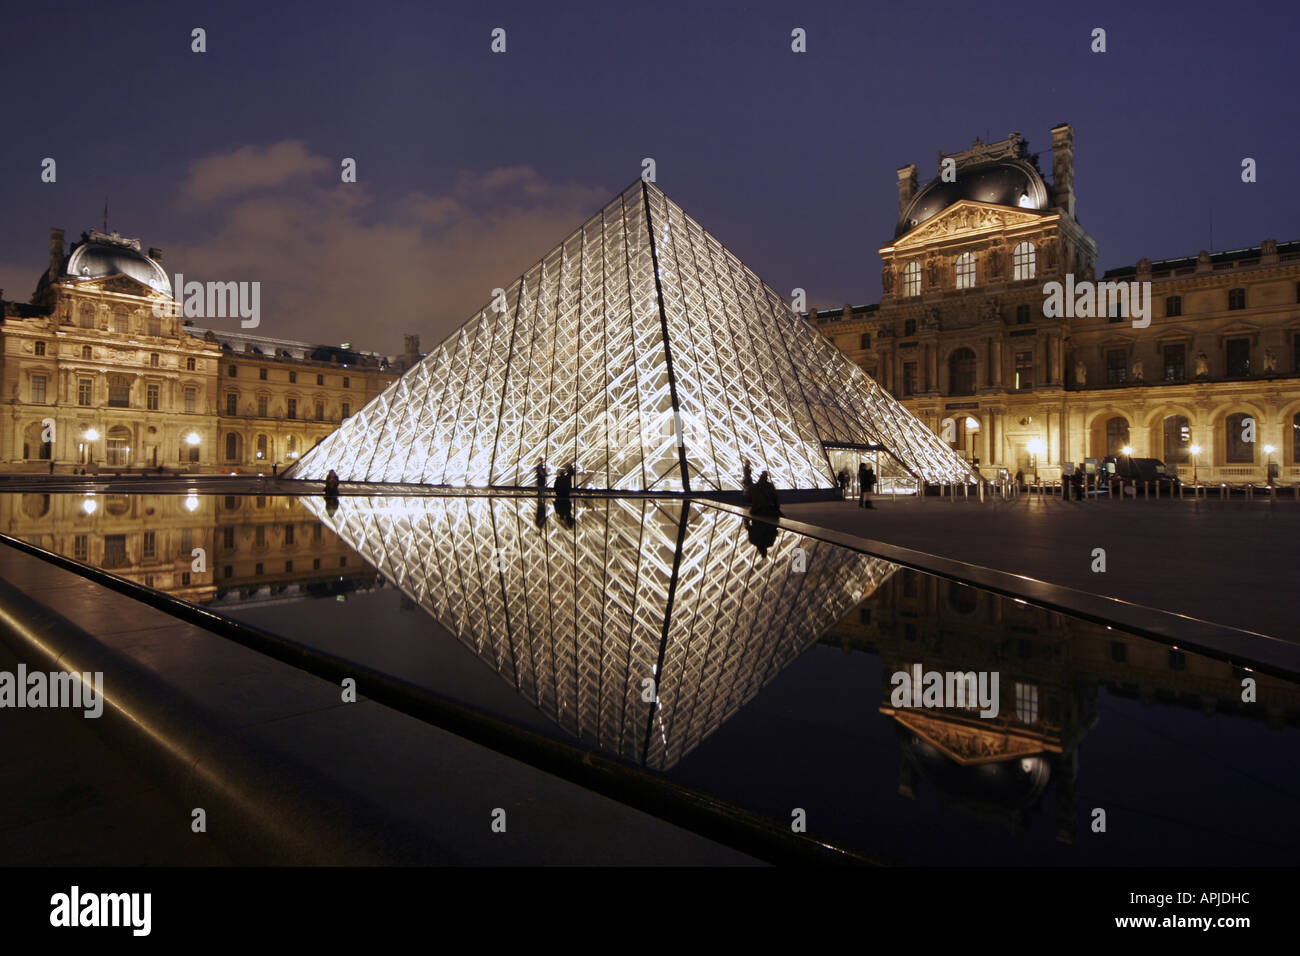 Le Louvre museum Pyramid Paris at night Stock Photo